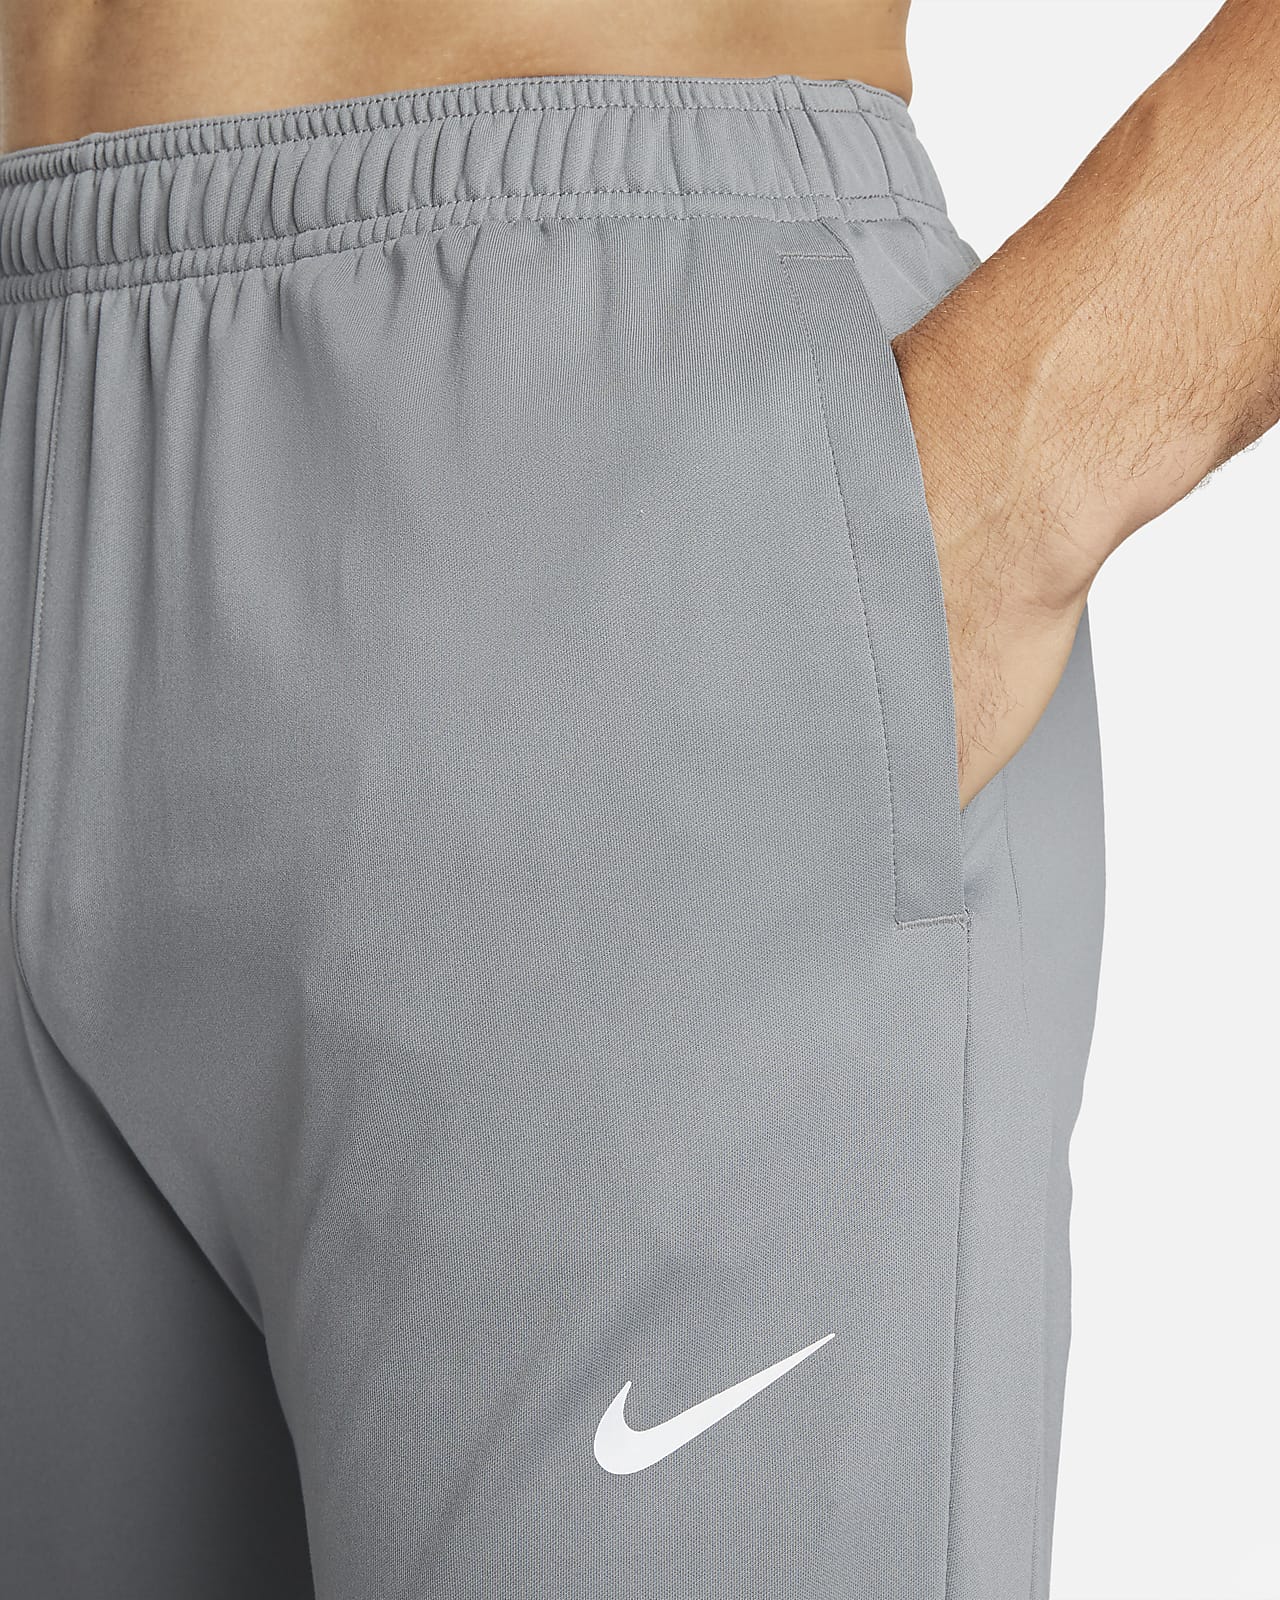 Men's Nike Dri-FIT Challenger Pants